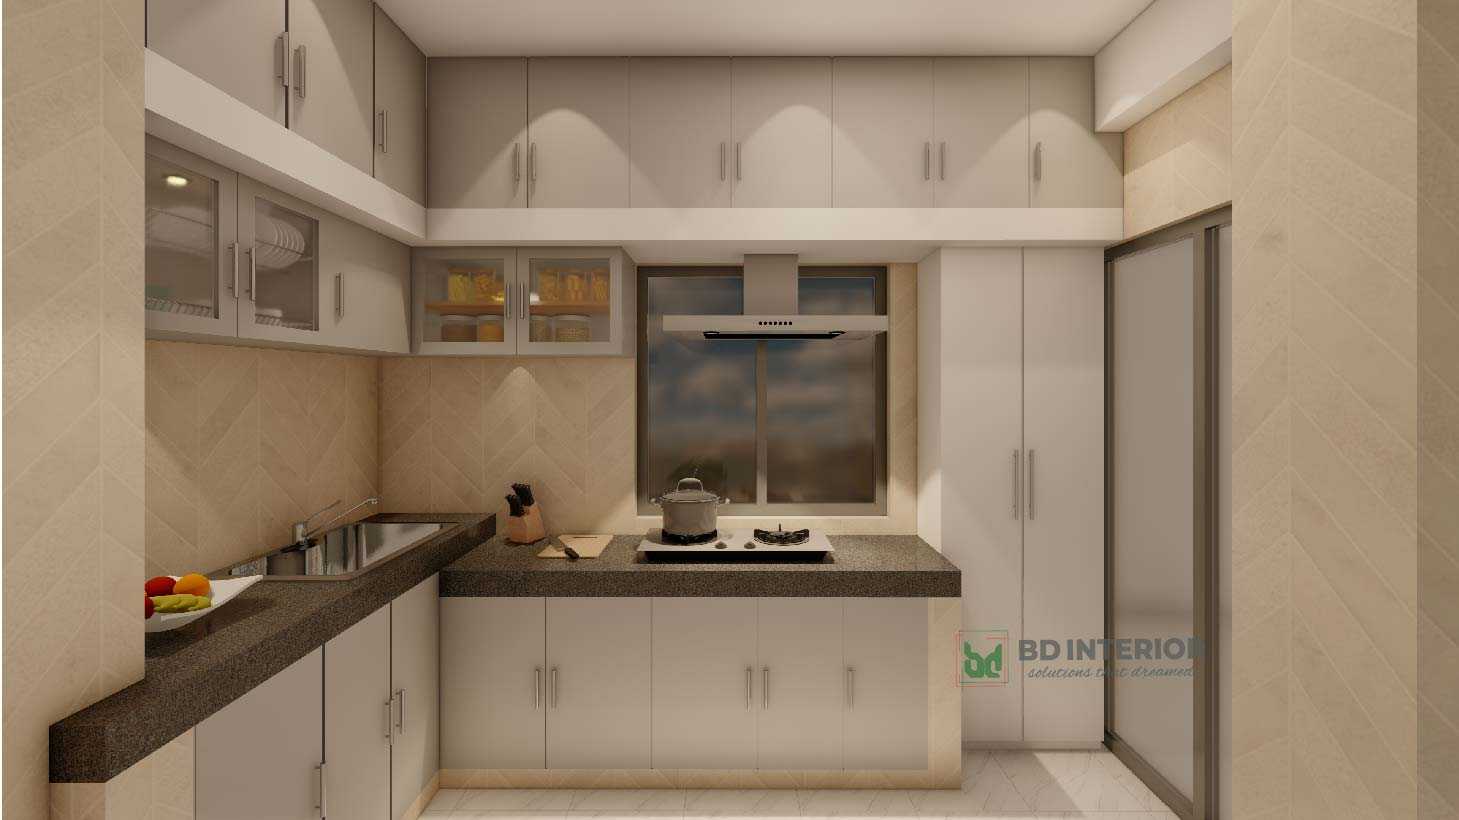 luxurious kitchen interior design ideas at low cost